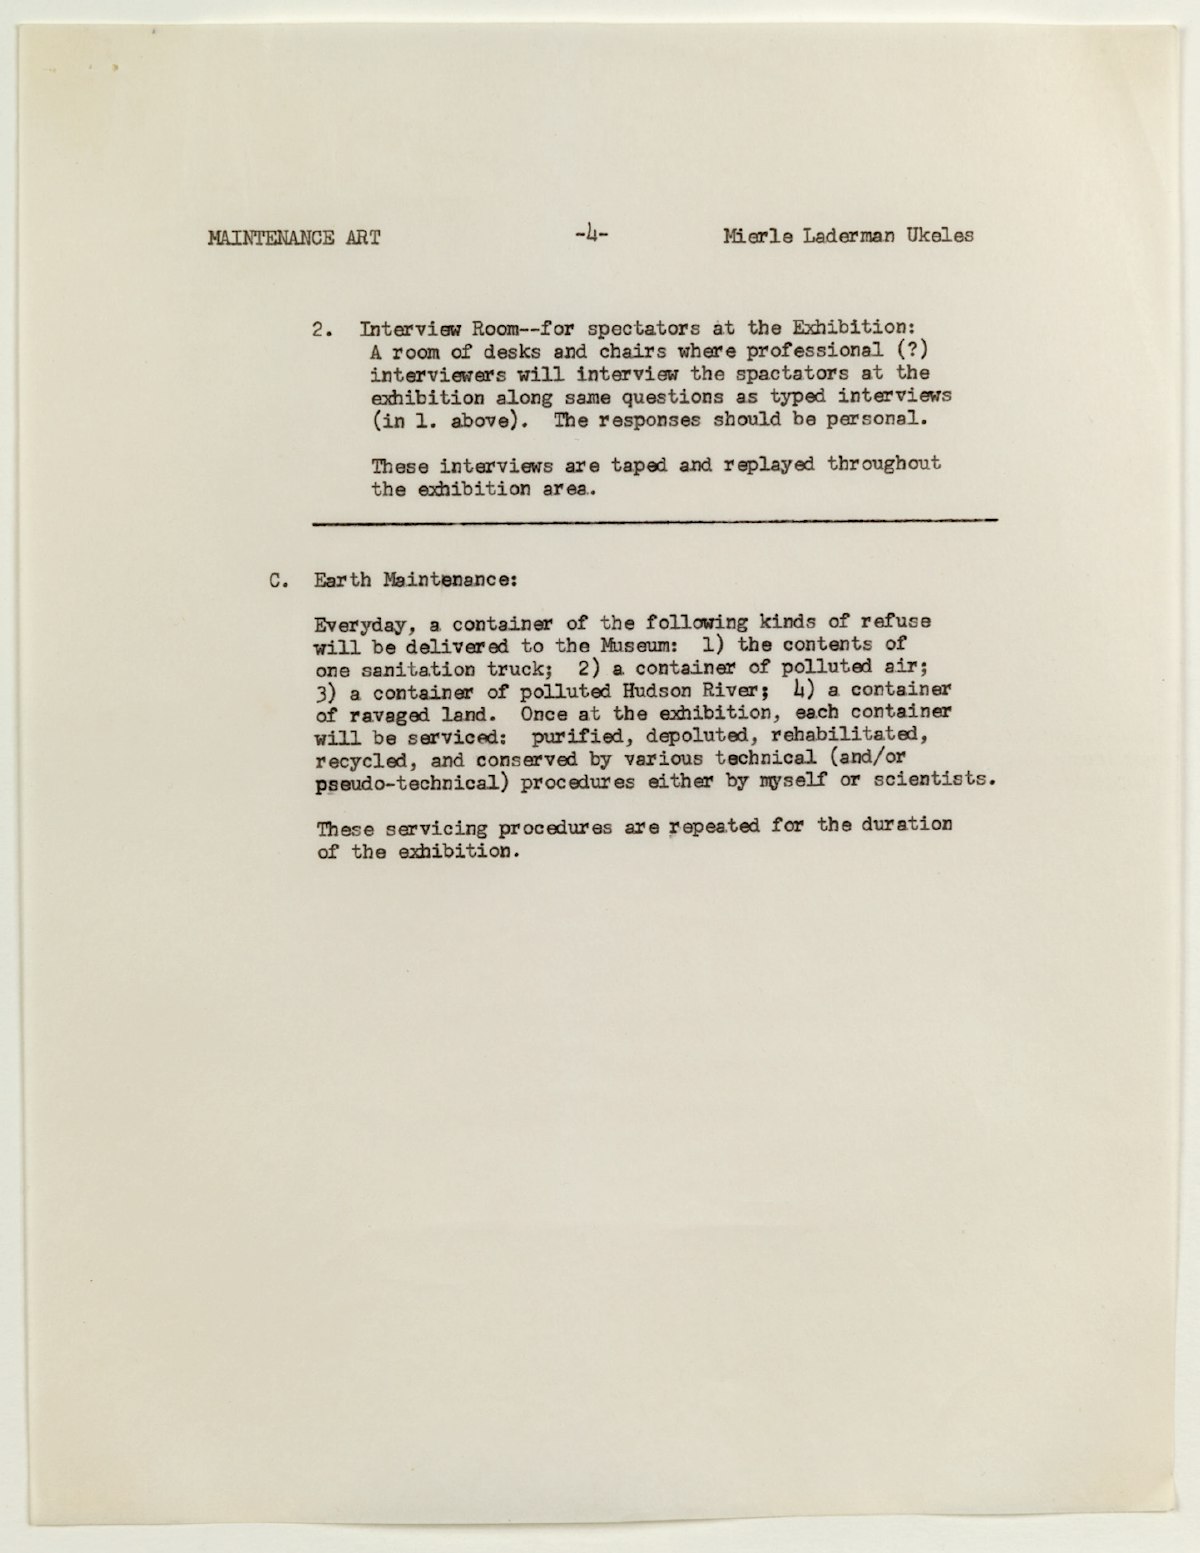 Ukeles Manifesto For Maintenance Art 1969 04